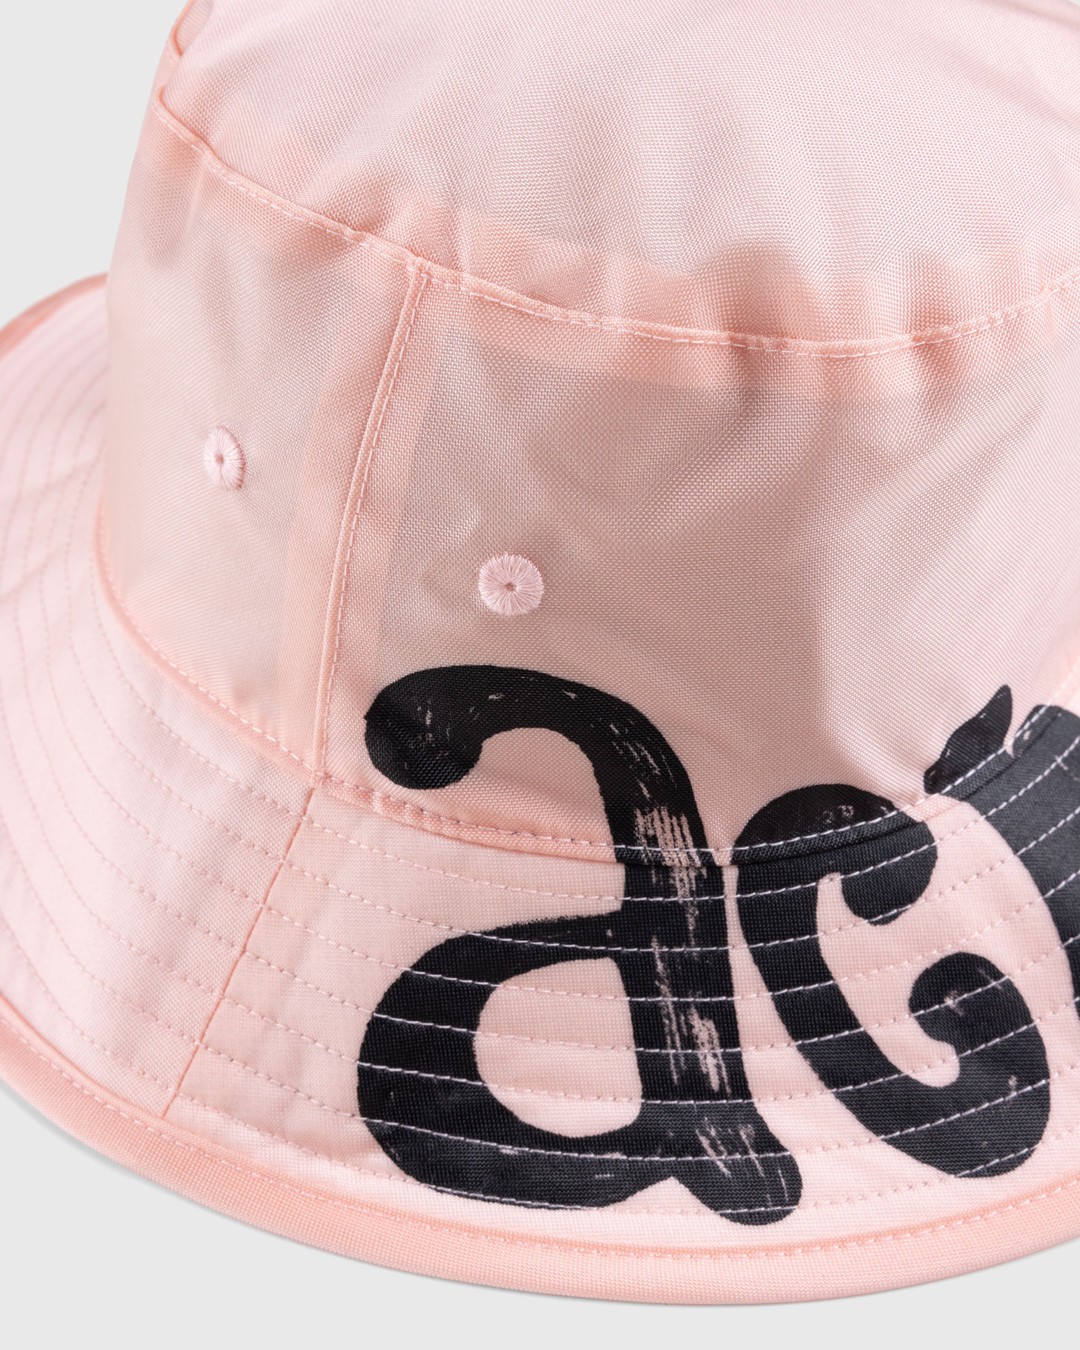 Acne Studios – Logo Bucket Hat Peach Pink - Hats - Pink - Image 3